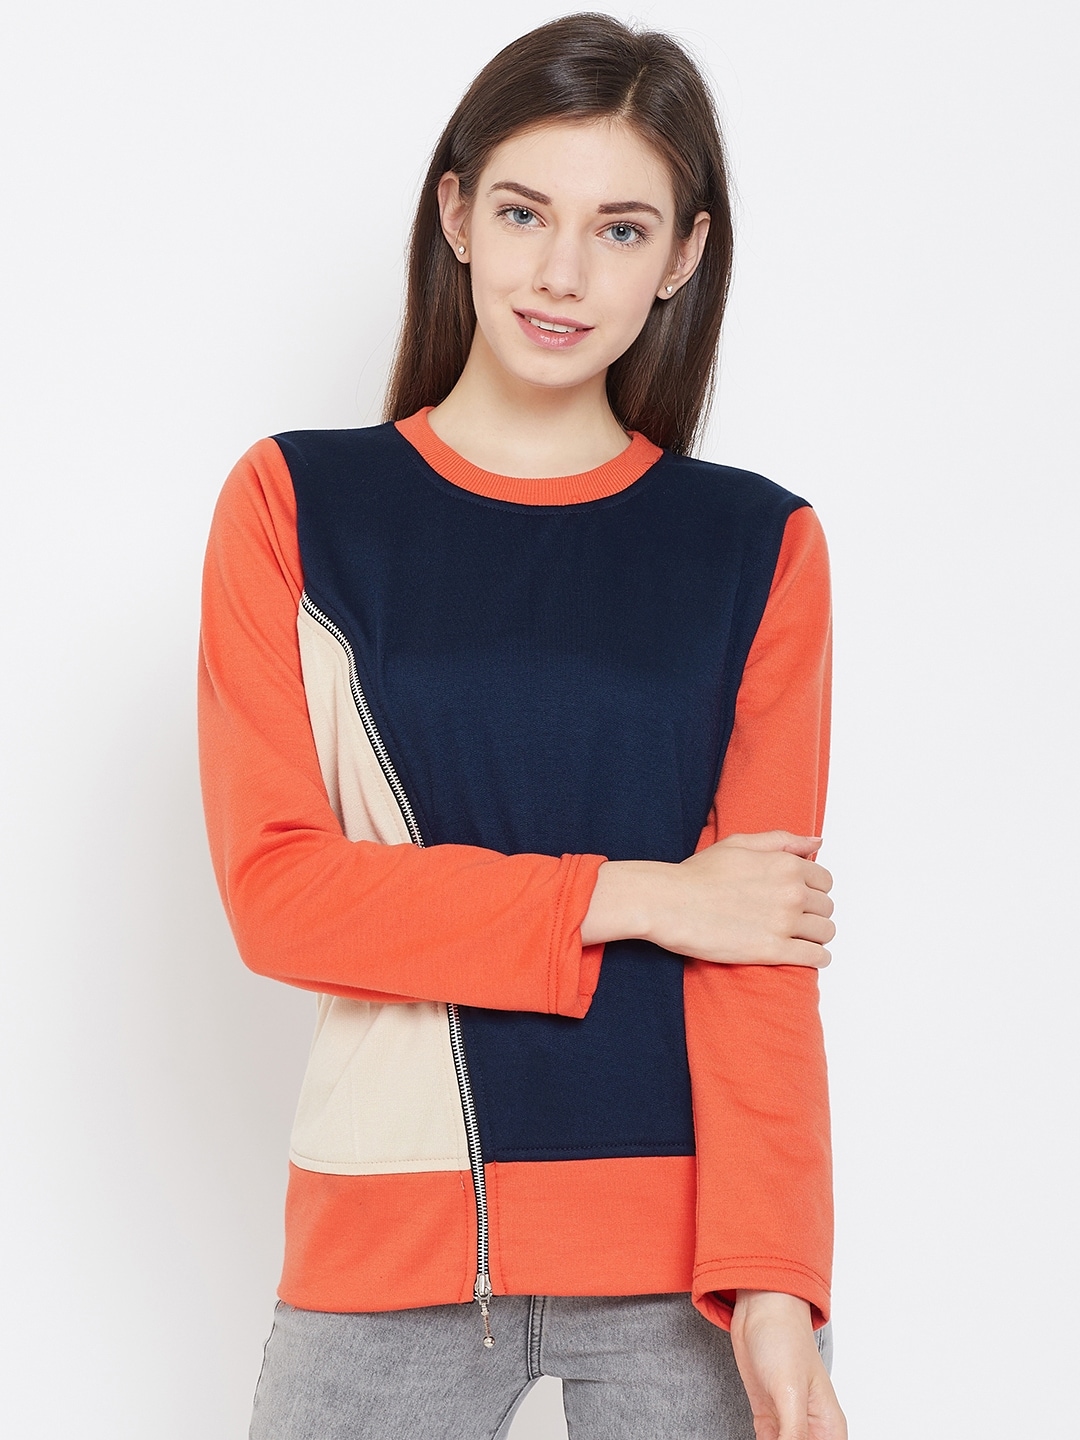 Belle Fille Women Navy Blue & Orange Colourblocked Sweatshirt Price in India